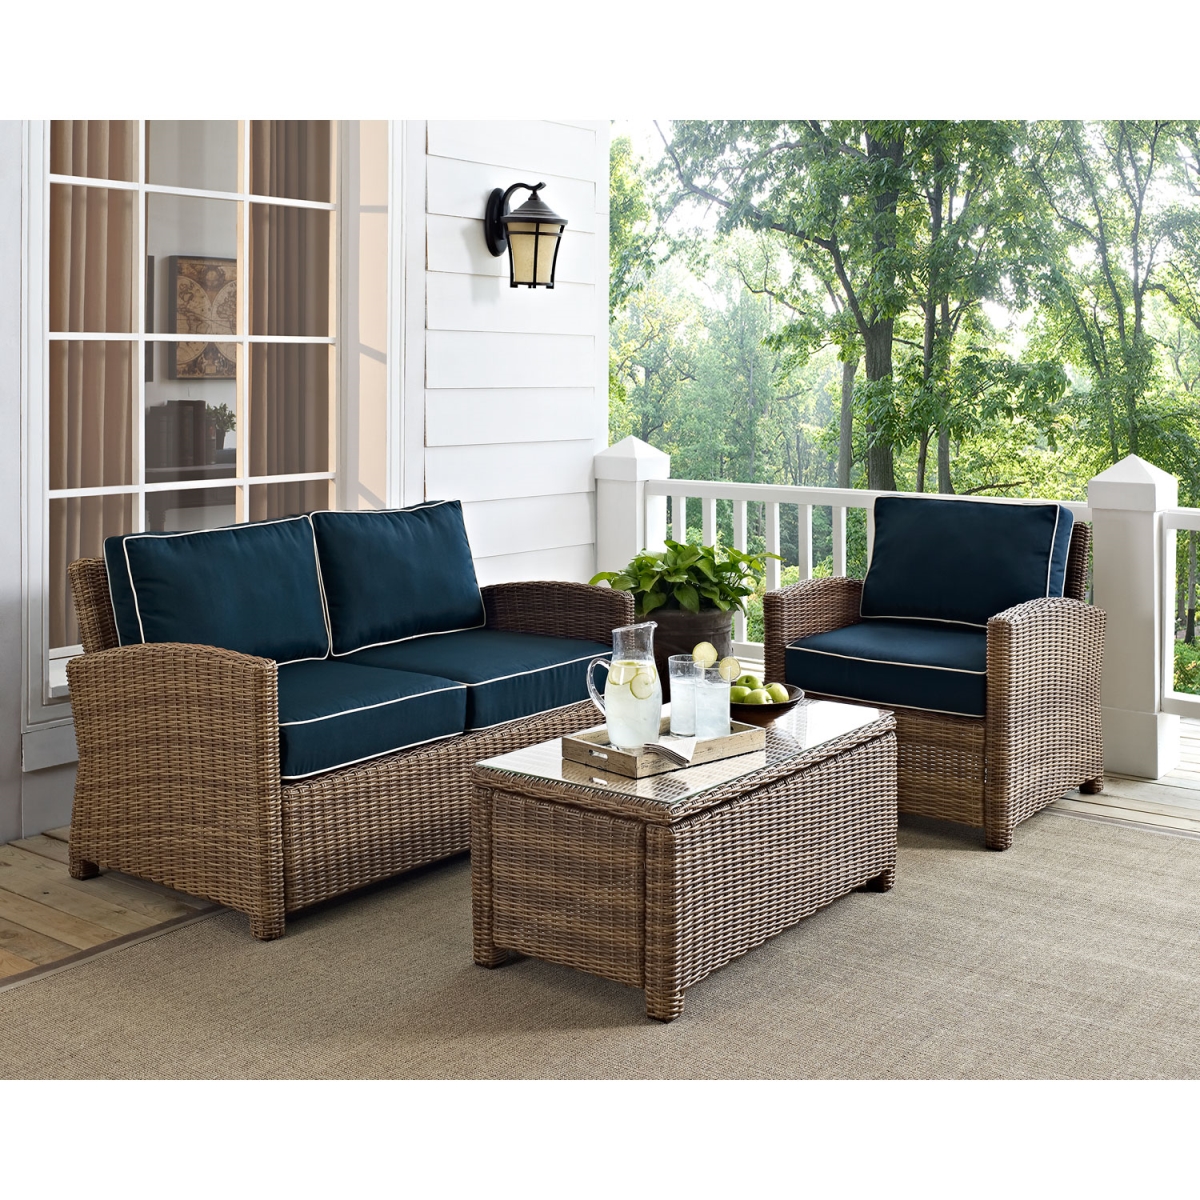 Ko70165-nv 3 Piece Bradenton Outdoor Loveseat Wicker Seating Set With Navy Cushions - Weathered Brown